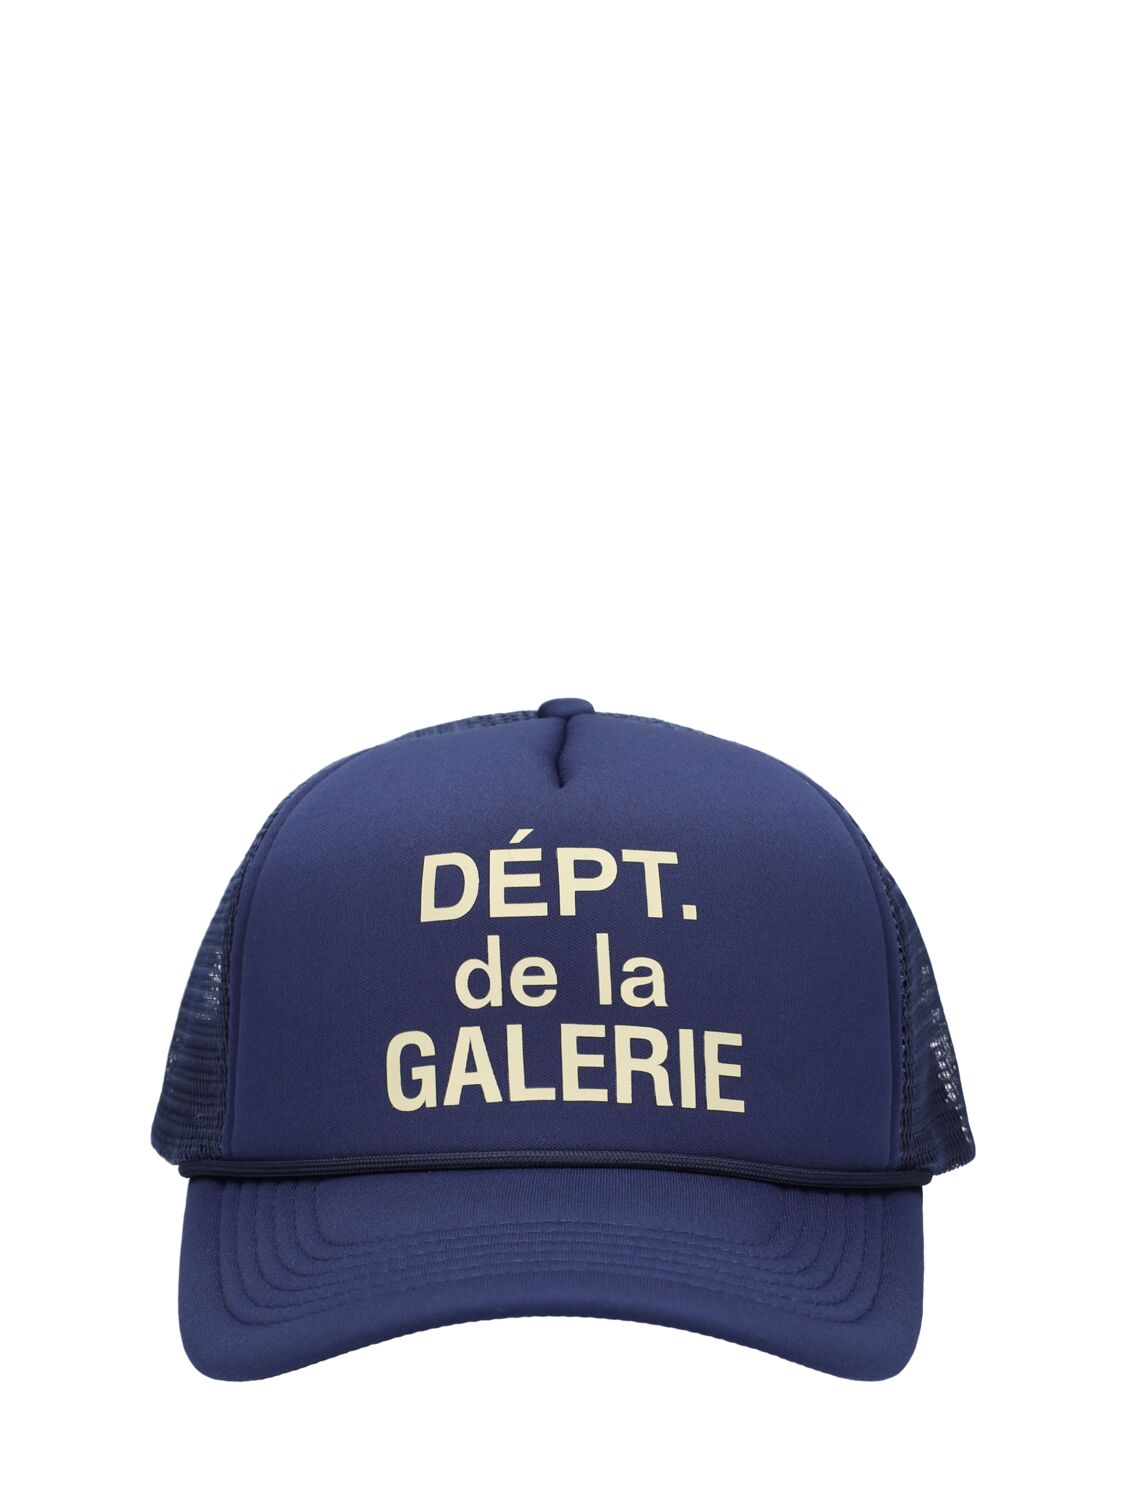 Gallery Dept. 法式毛圈布logo卡车司机帽 In Navy